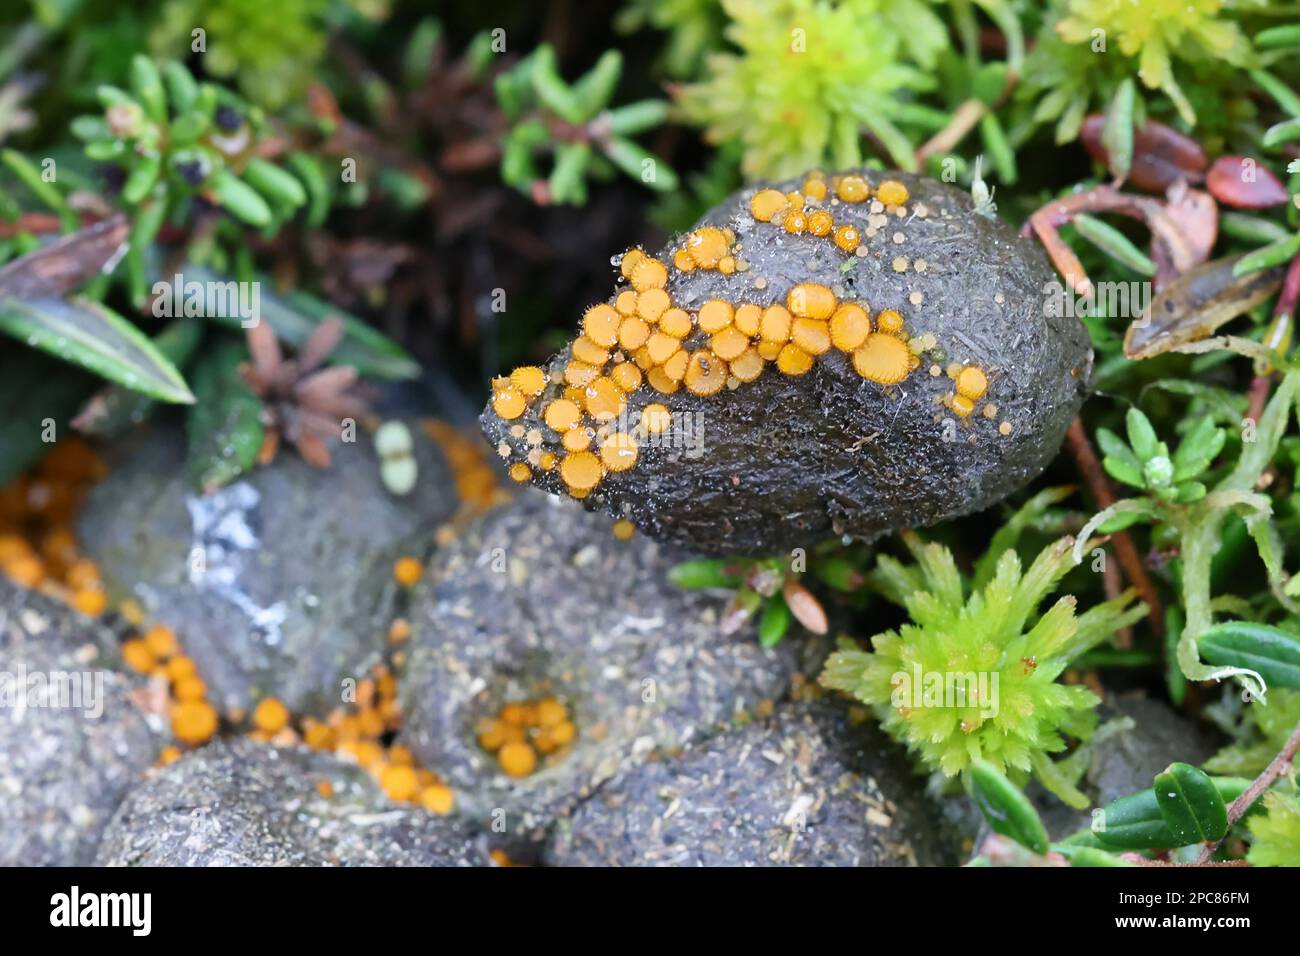 Cheilymenia stercorea, apothecial fungus growing on moose dung in Finland, no common English name Stock Photo